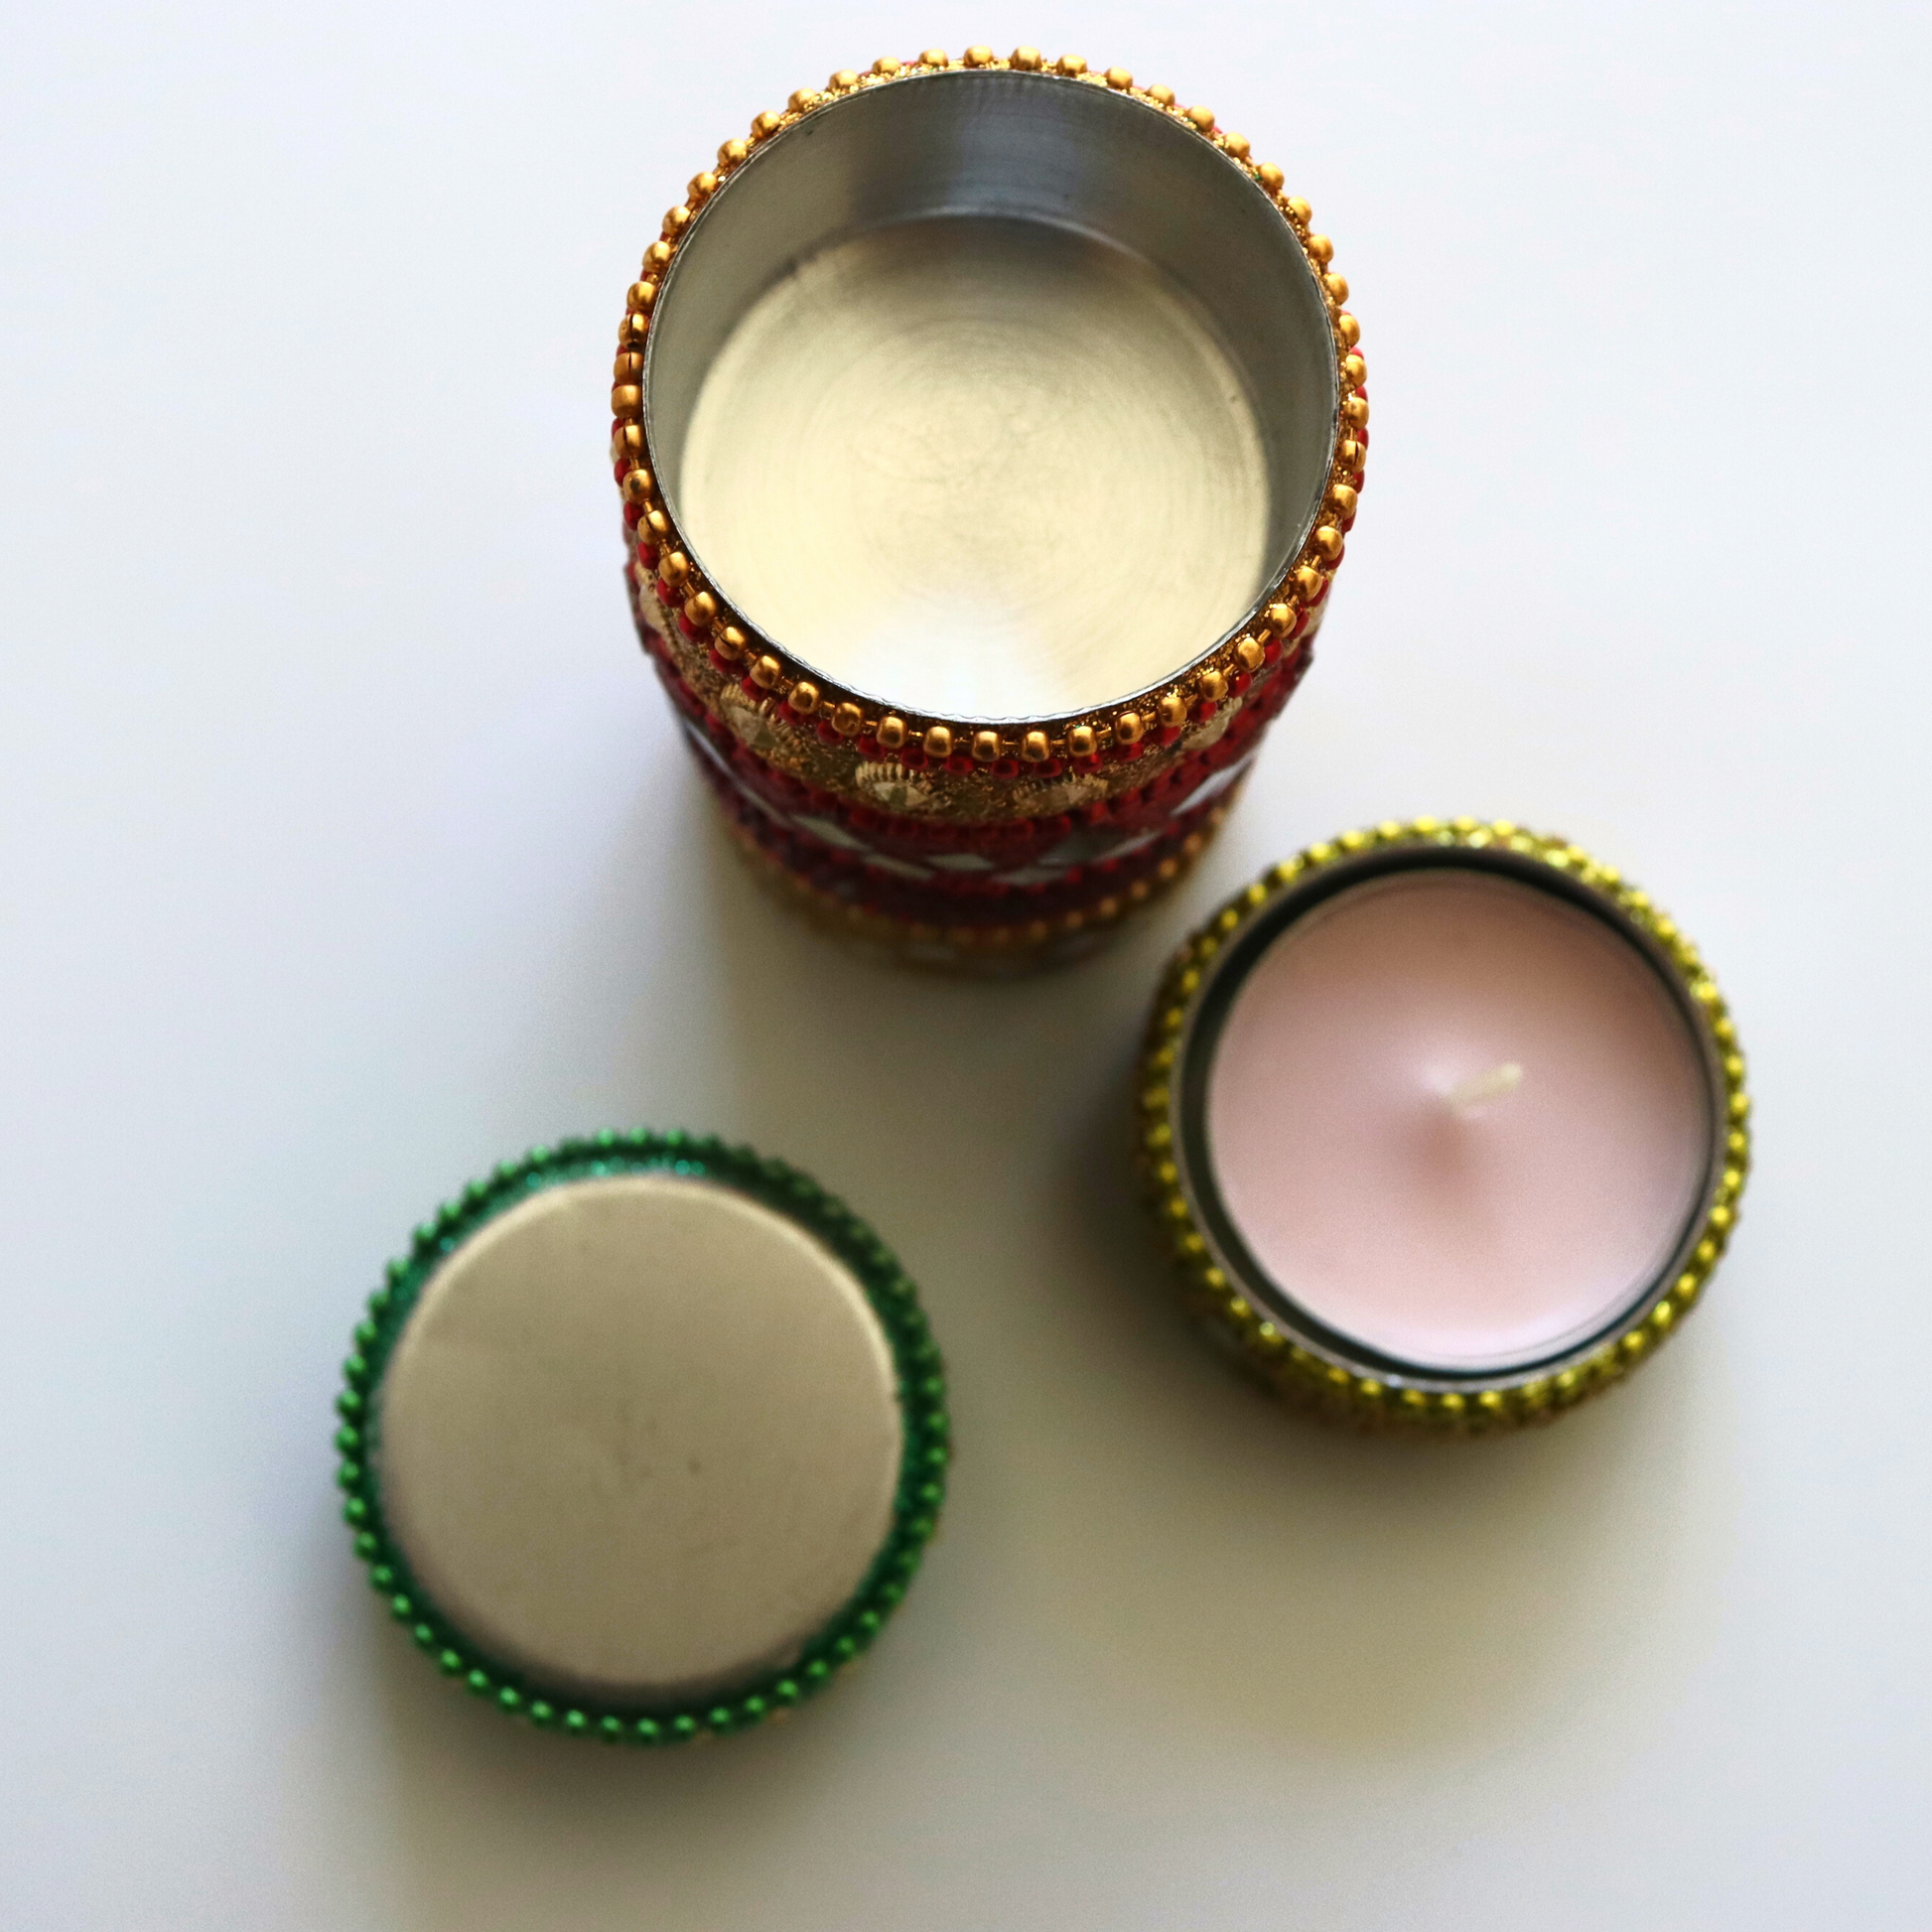 Handmade Decorative Tea Light Holders - Set of 6, Colourful, Vibrant